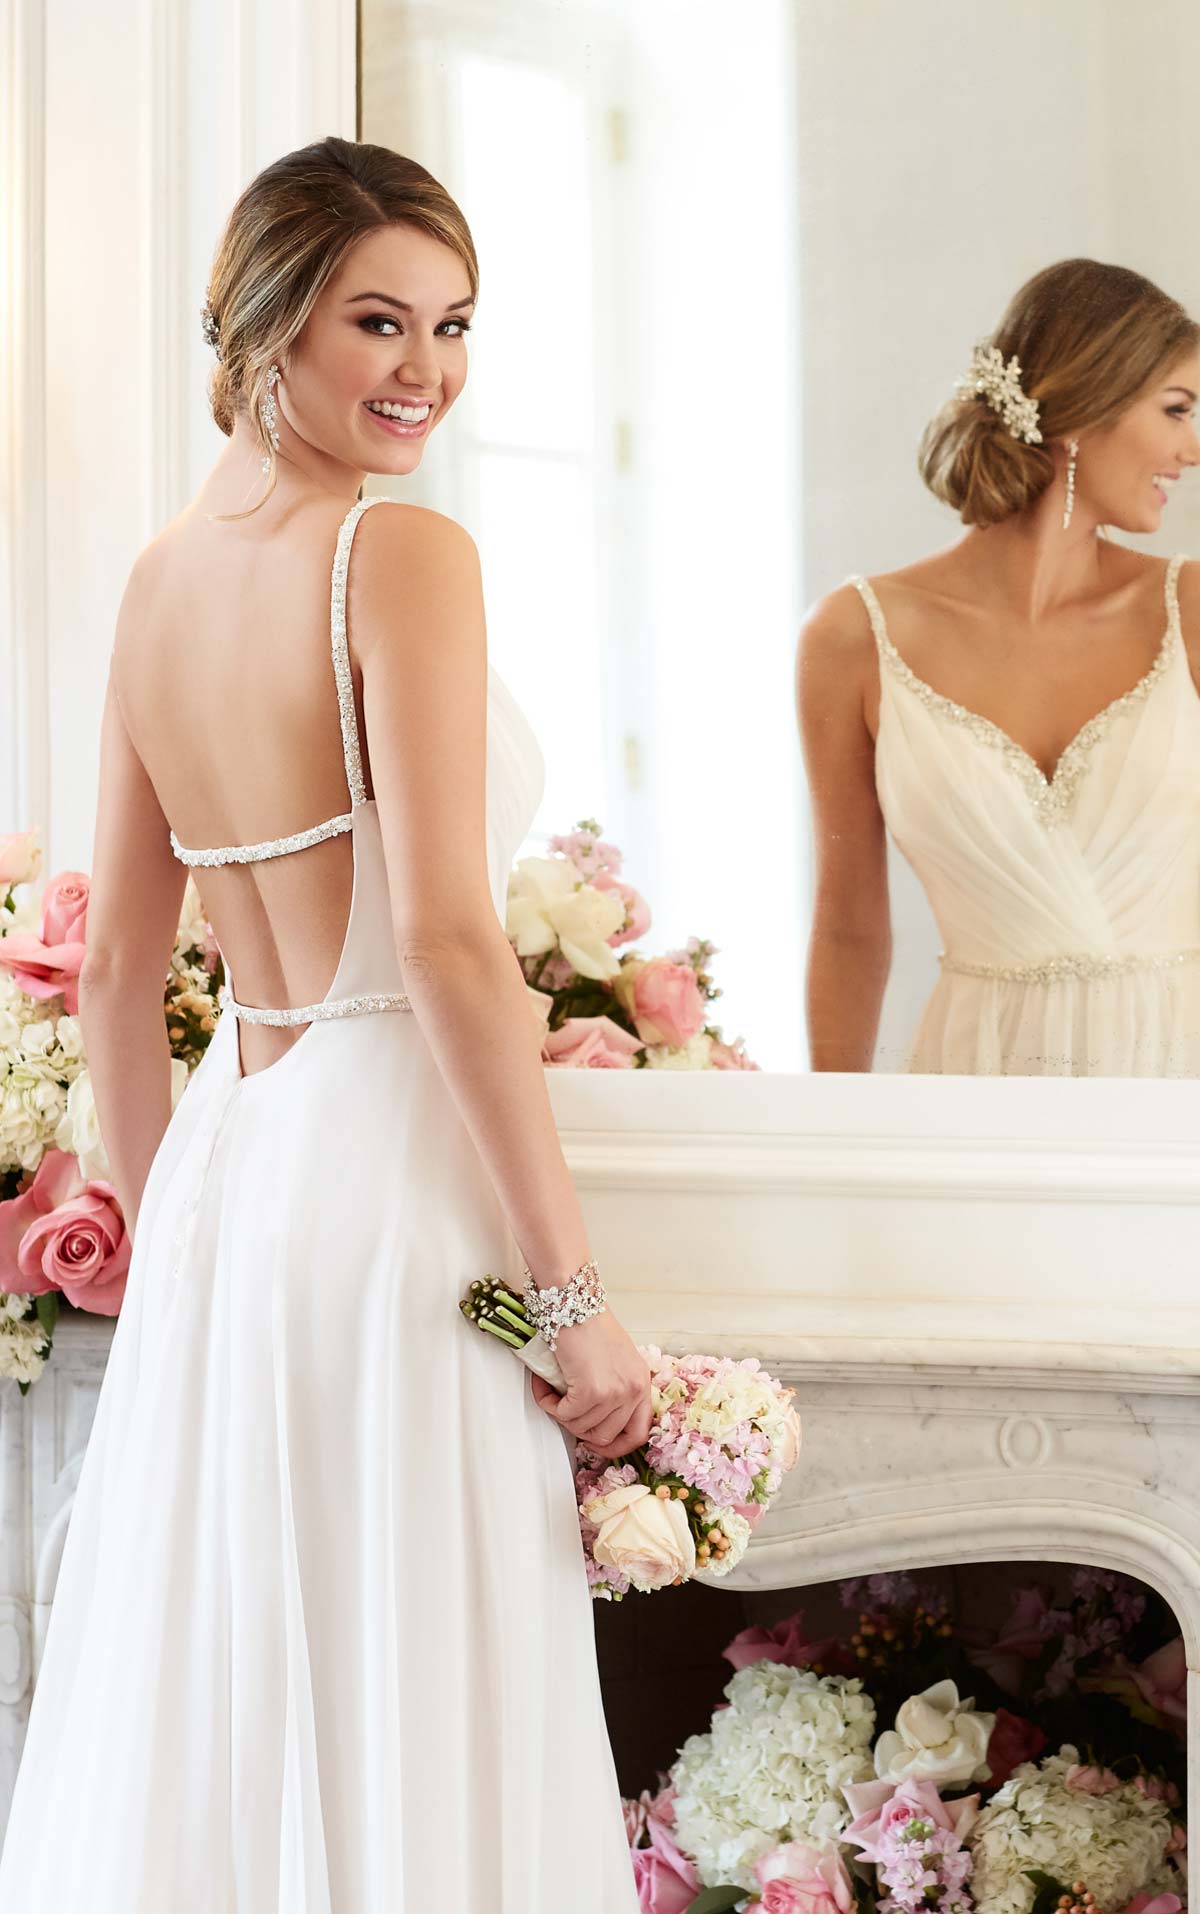 65 Perfect Low Back Wedding Dresses The Best Wedding Dresses